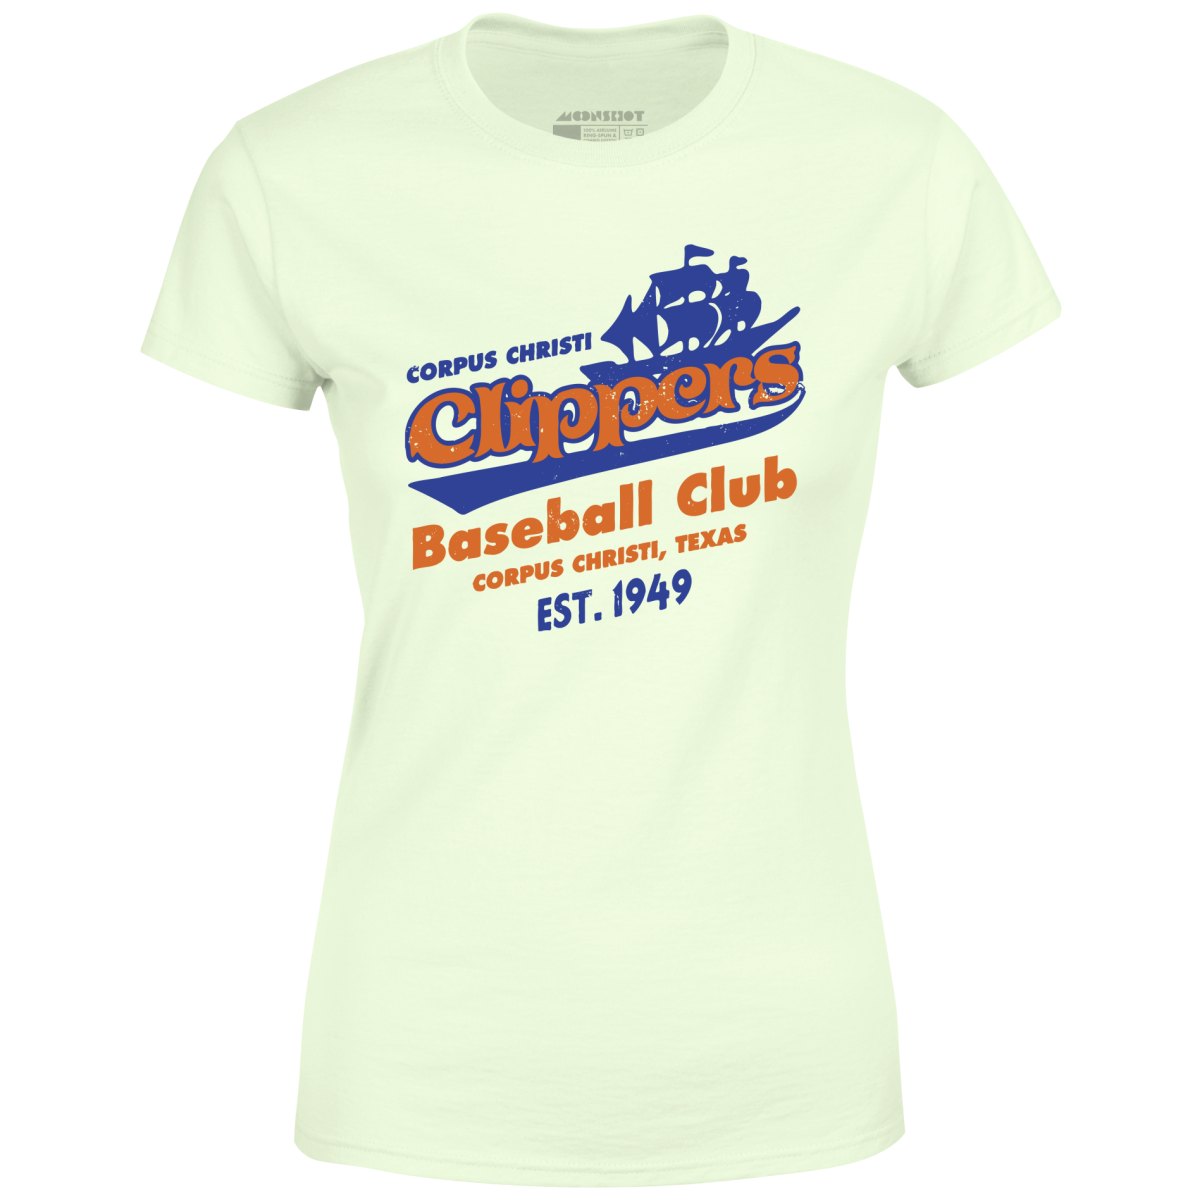 Corpus Christi Clippers - Texas - Vintage Defunct Baseball Teams - Women's T-Shirt